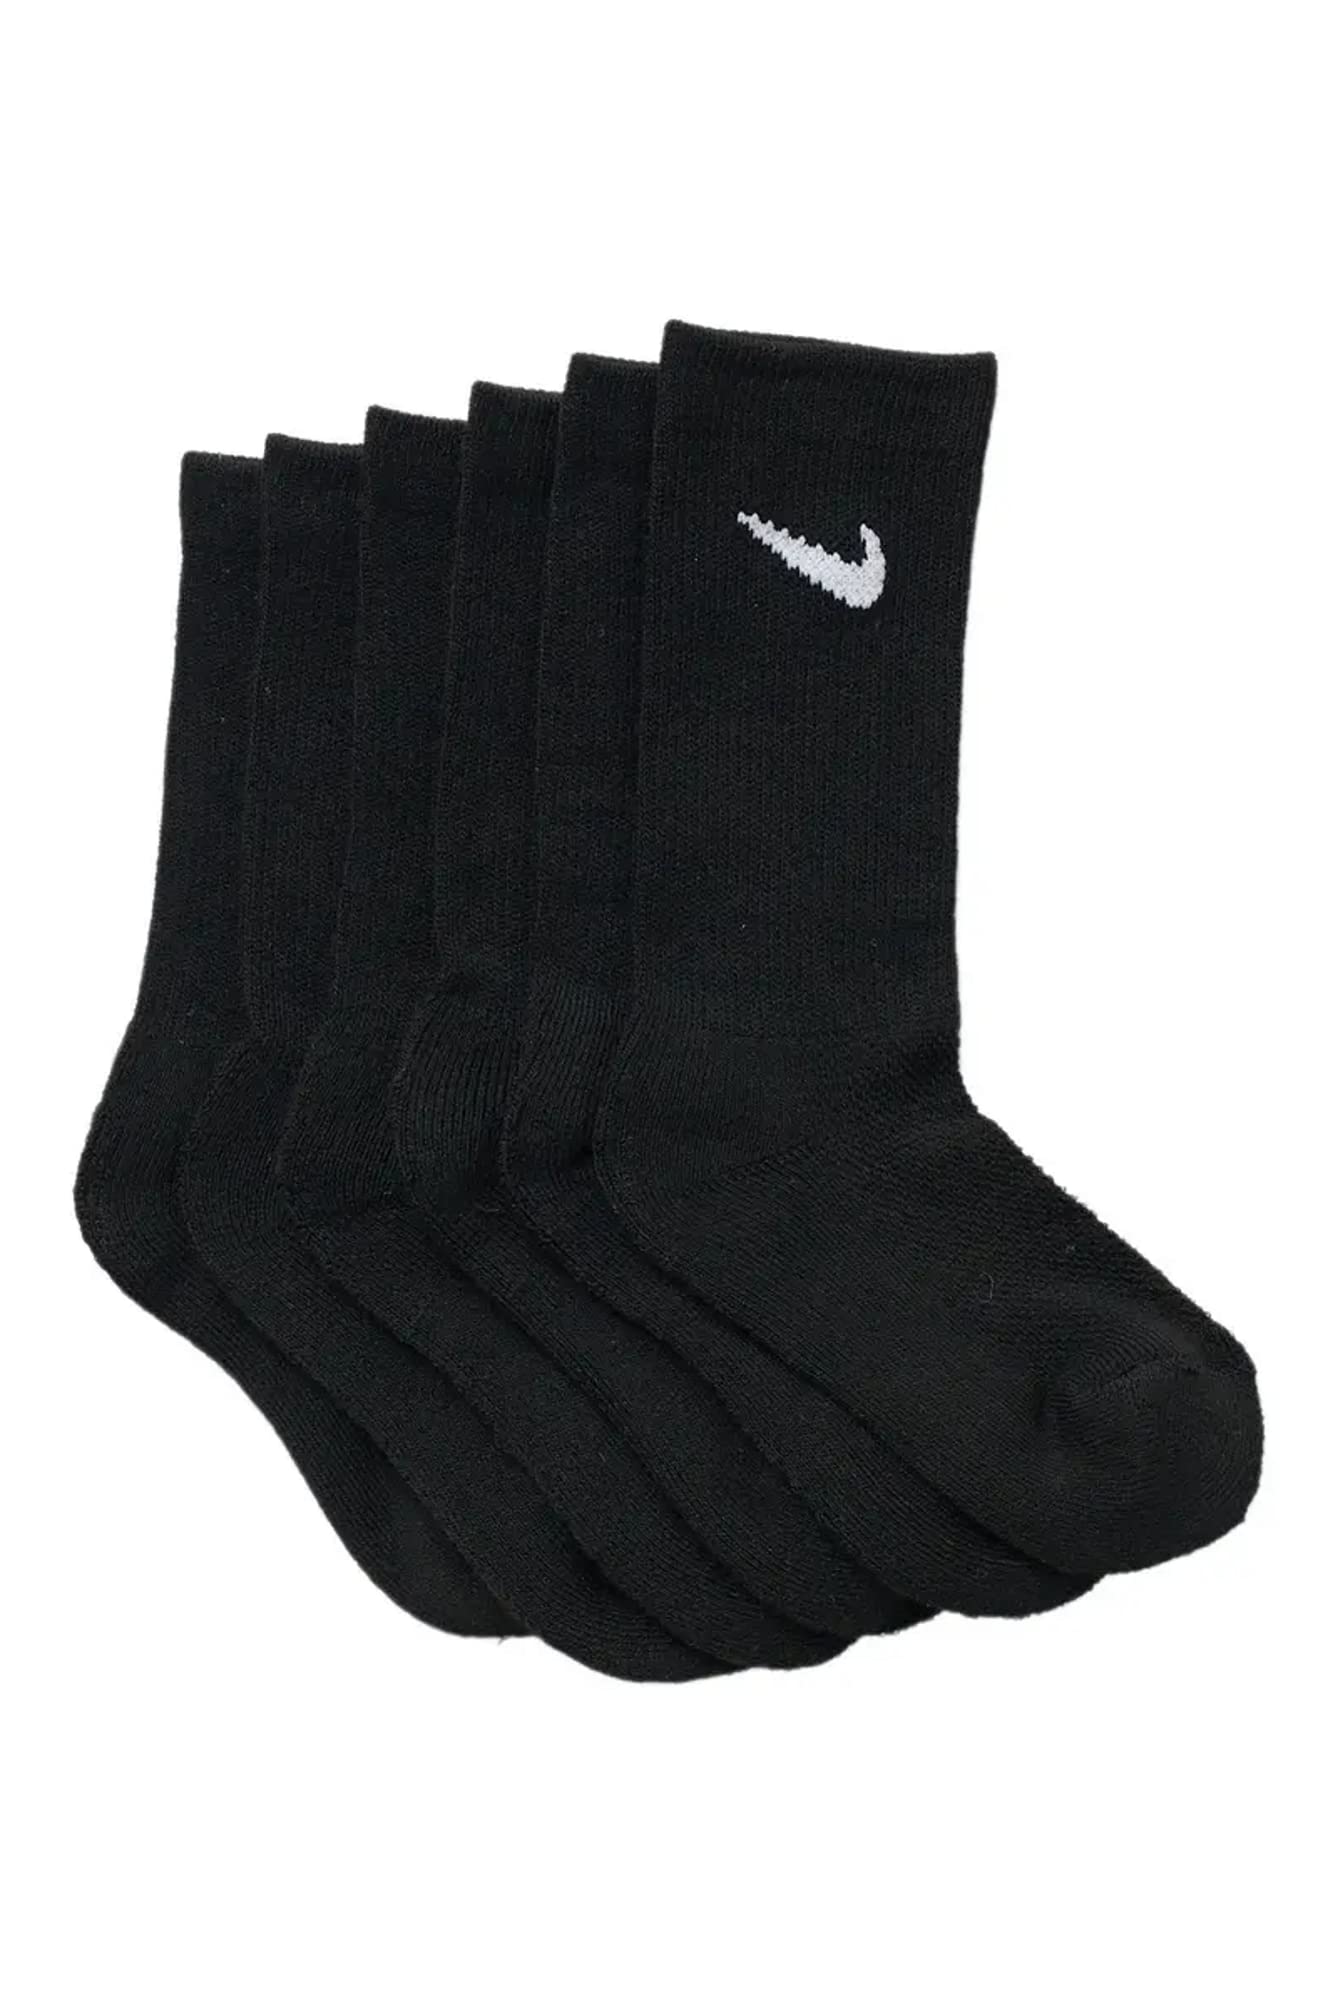 Nike Kids Cushioned Crew Socks, 6 Pairs, Sock Size 5-7 yrs, Shoe Size 10C-3Y